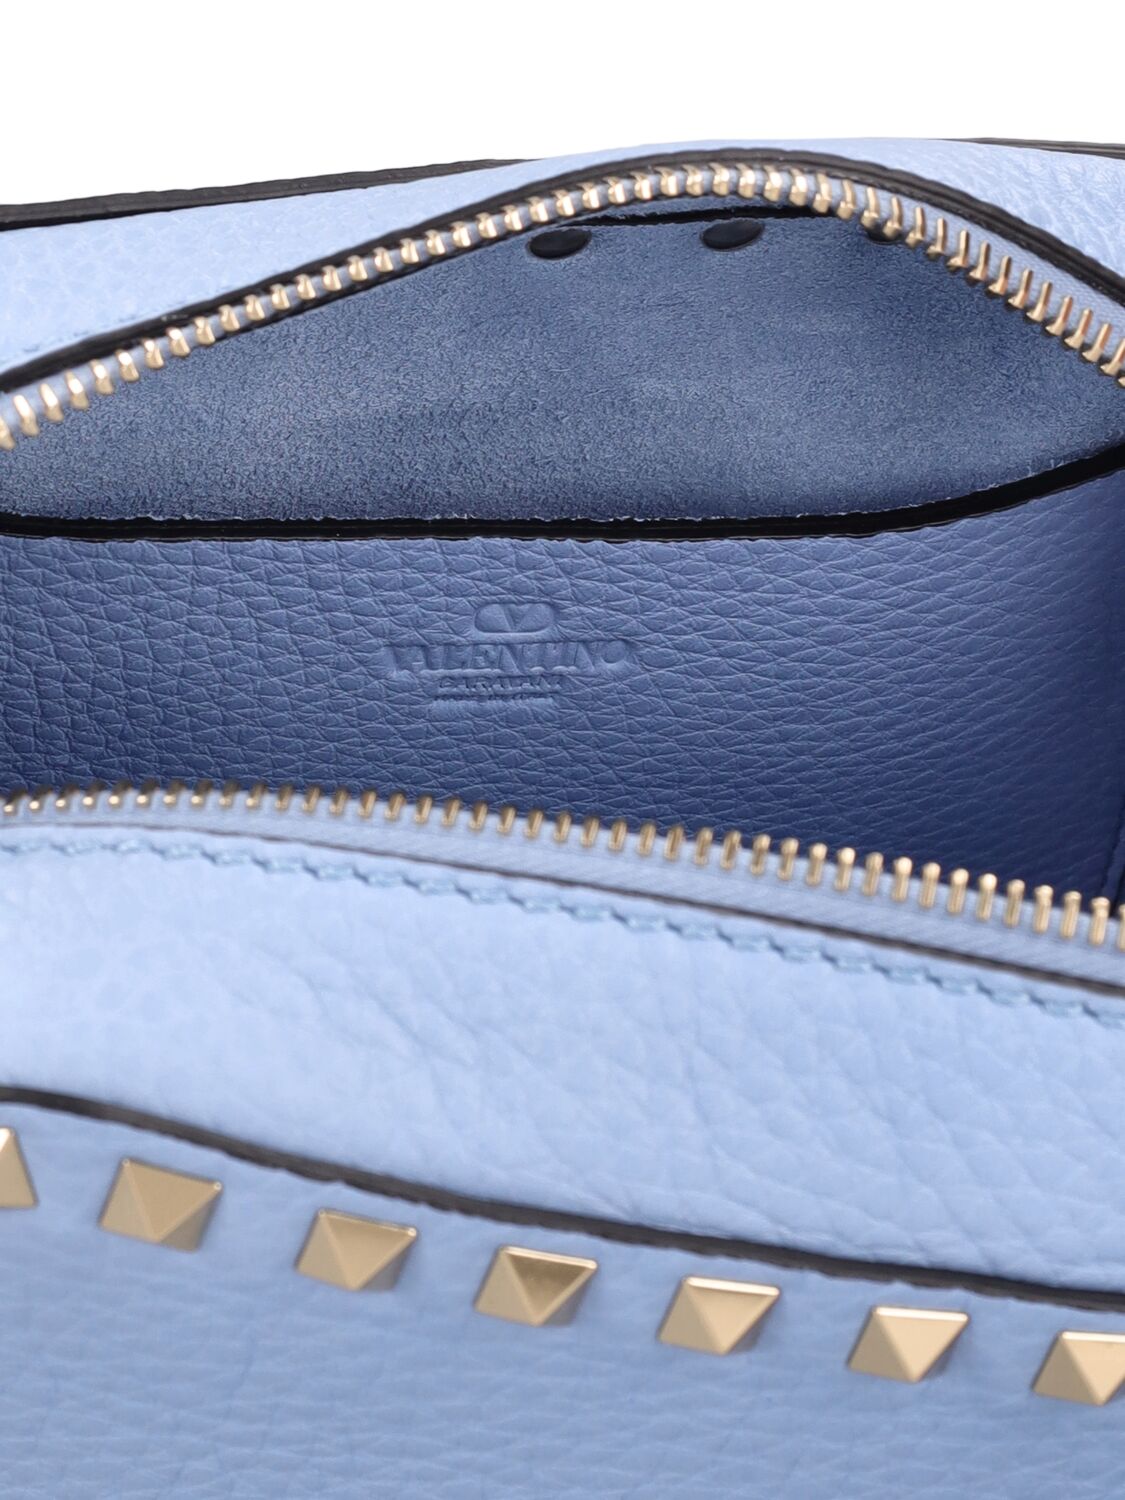 Shop Valentino Rockstud Leather Crossbody Bag In Poplin Blue